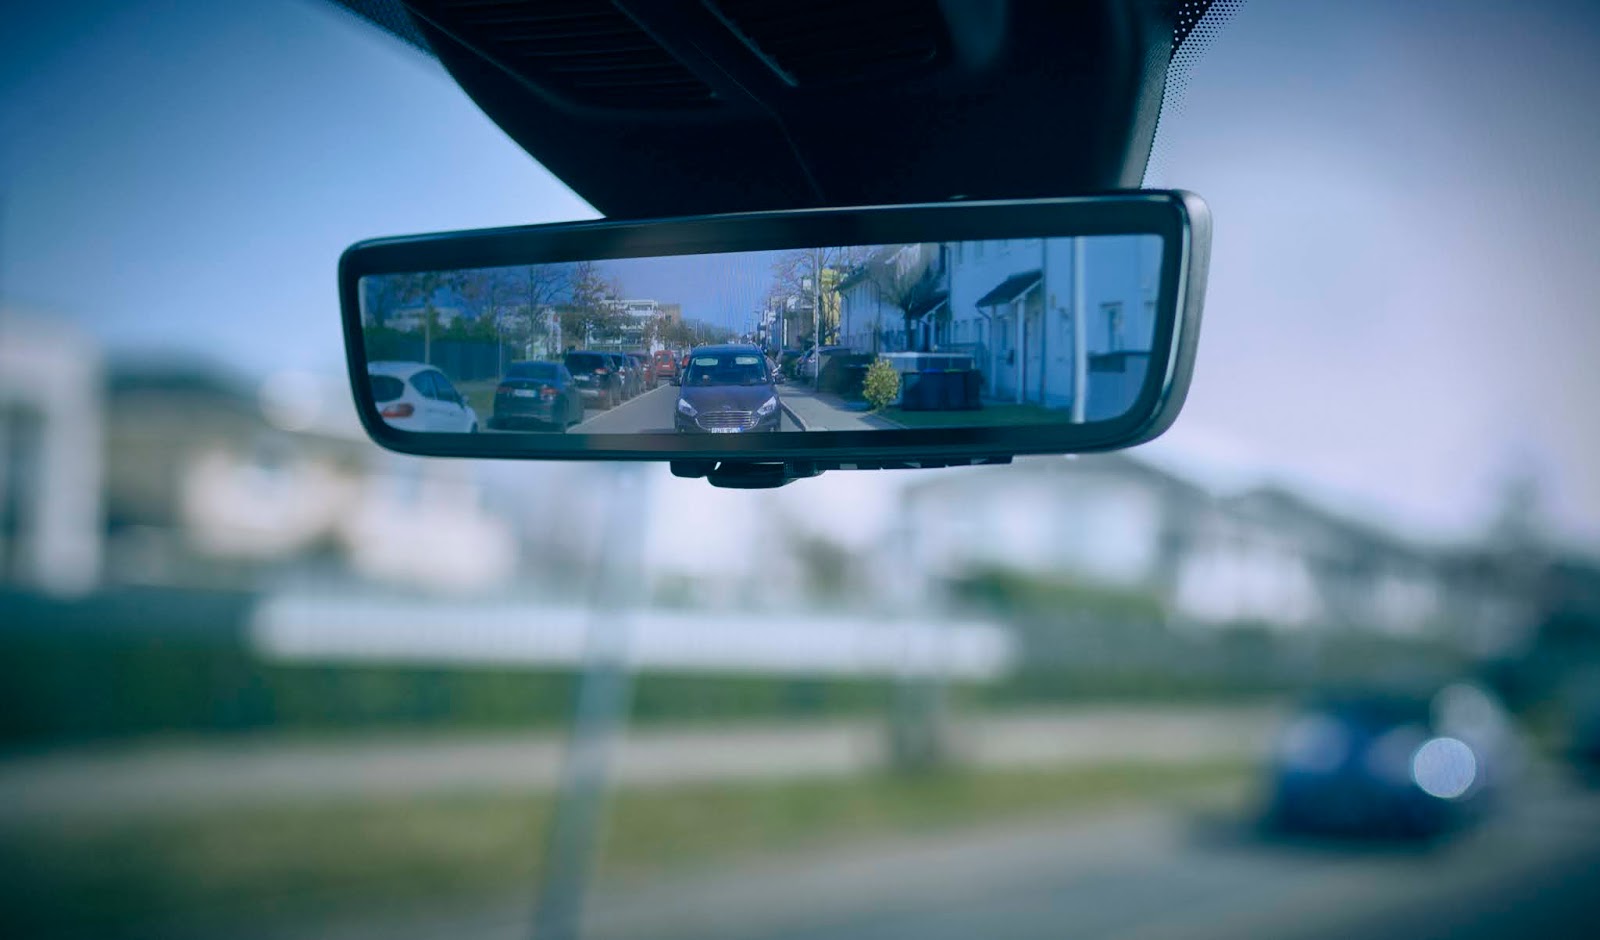 2021 Ford Smart Mirror 2B01 Αυτός είναι ο Έξυπνος Καθρέπτης της Ford